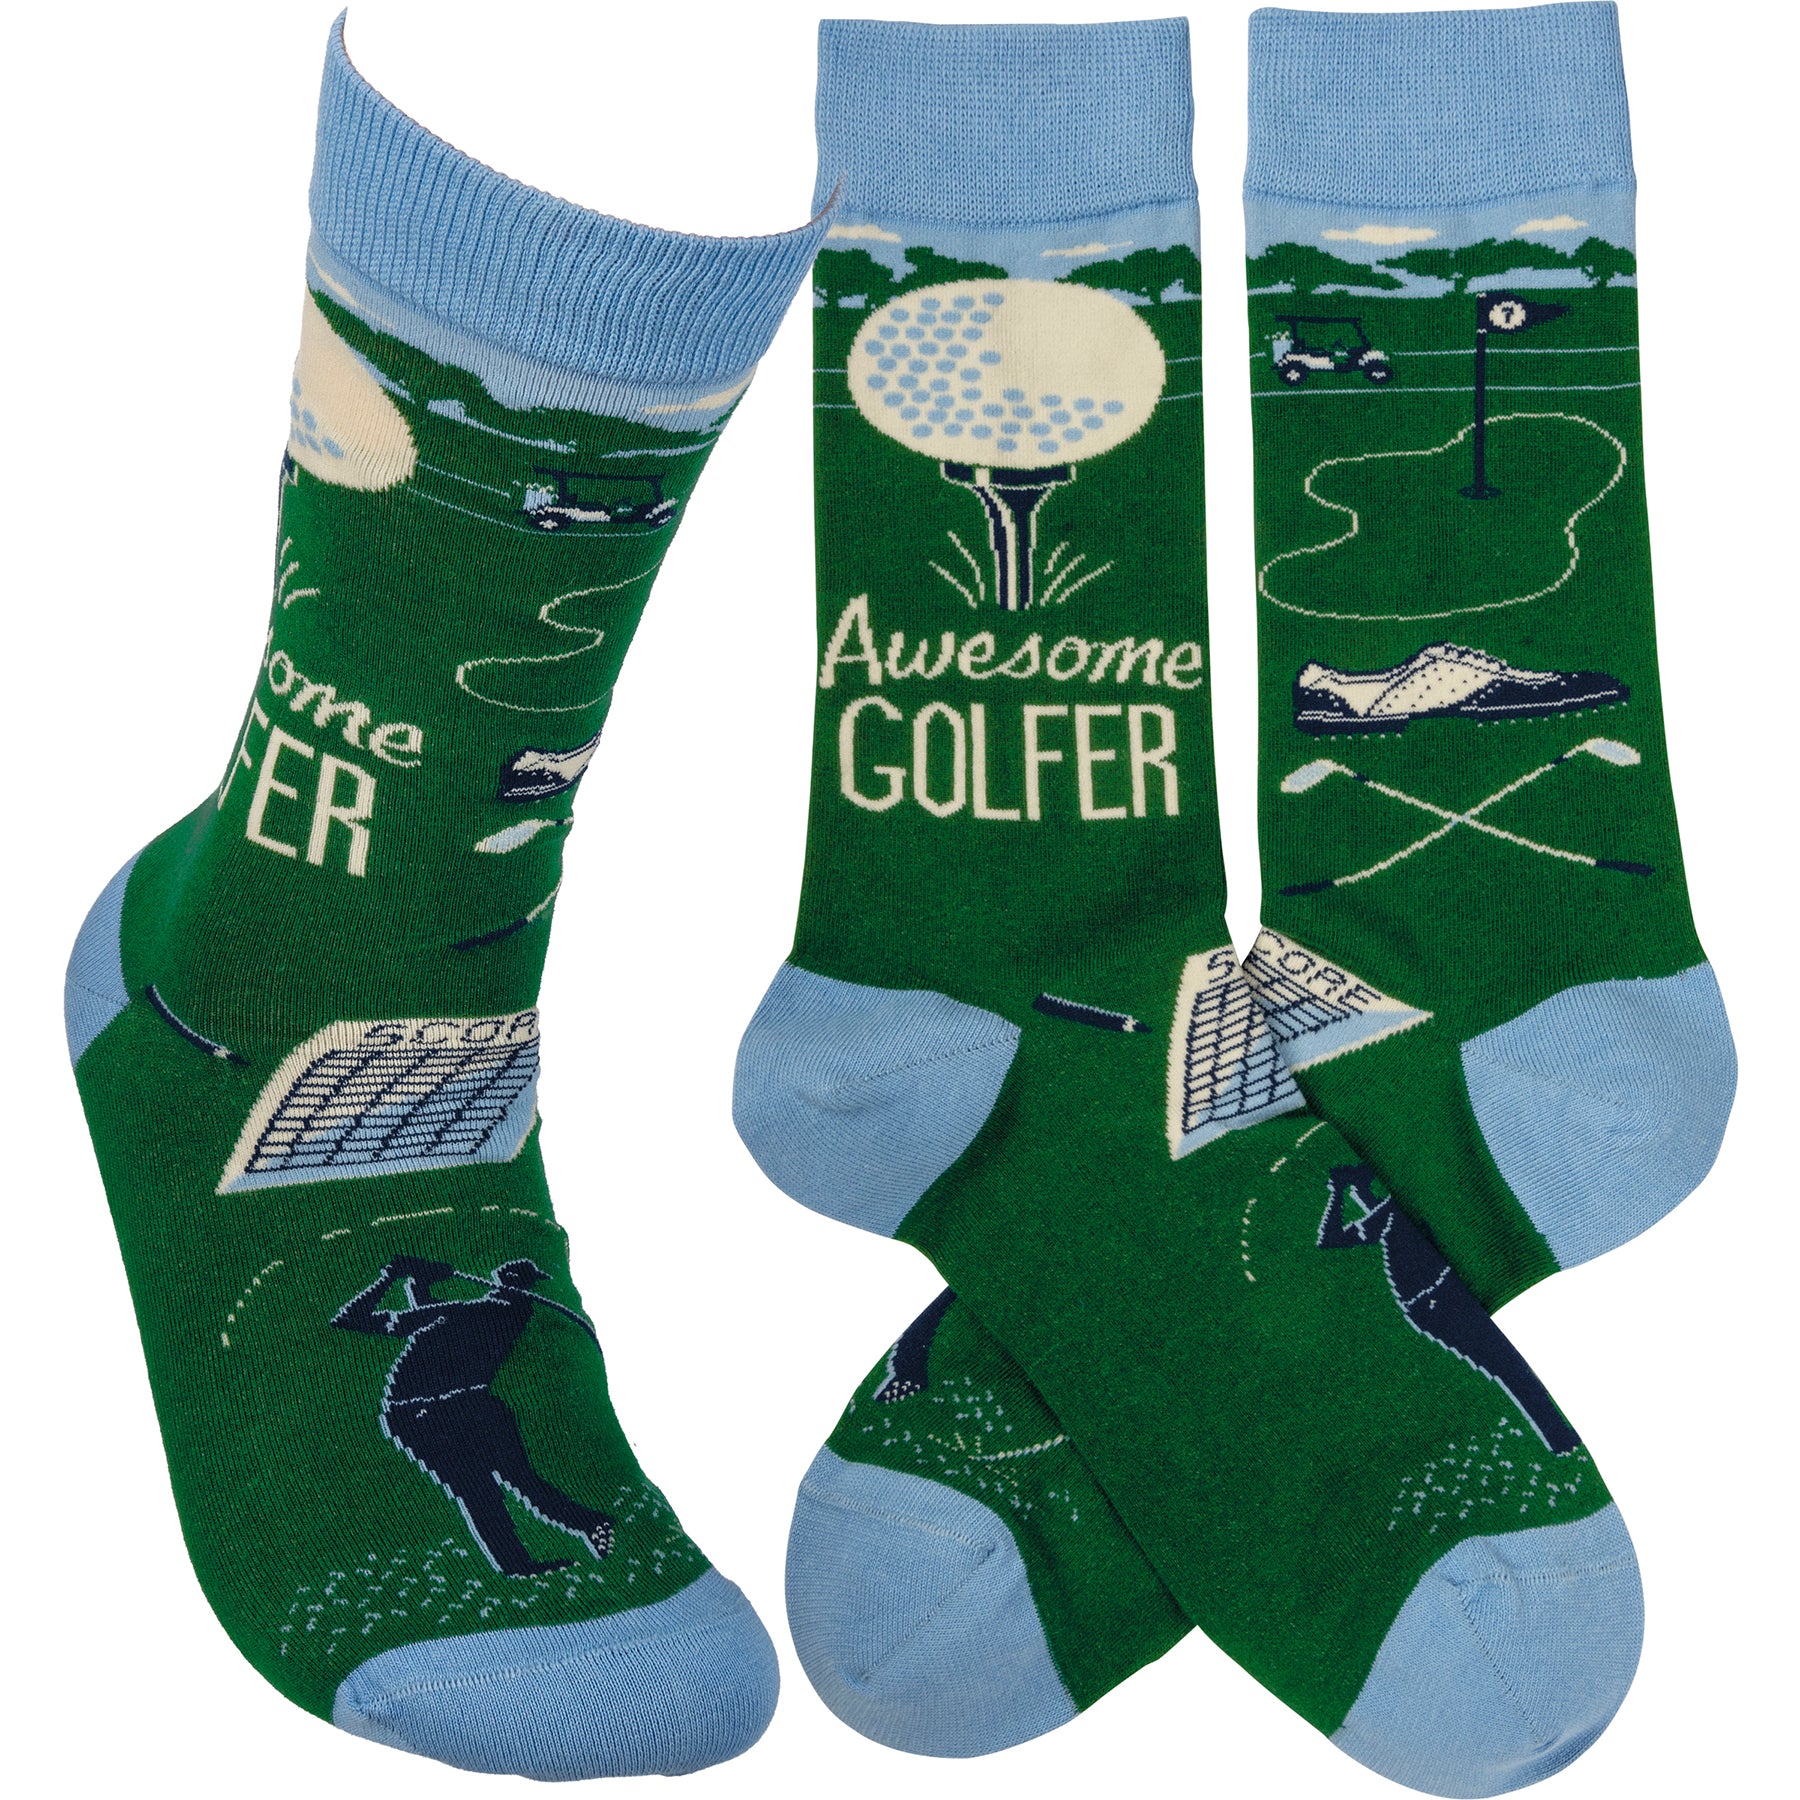 Awesome Golfer Socks